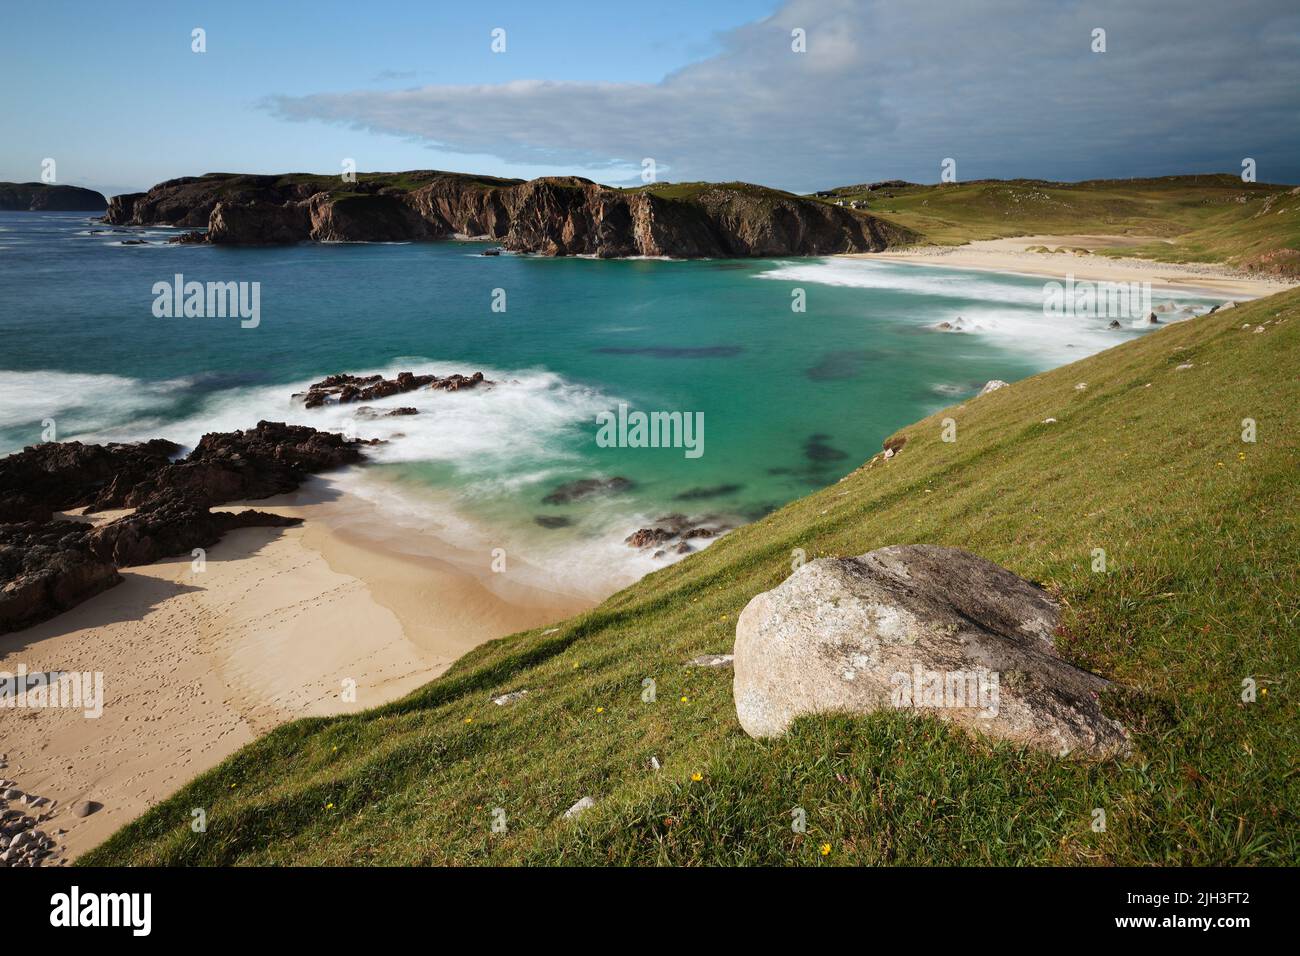 Mangersta beach (Mangurstadh) on Isle of Lewis, the Outer Hebrides, Scotland Stock Photo